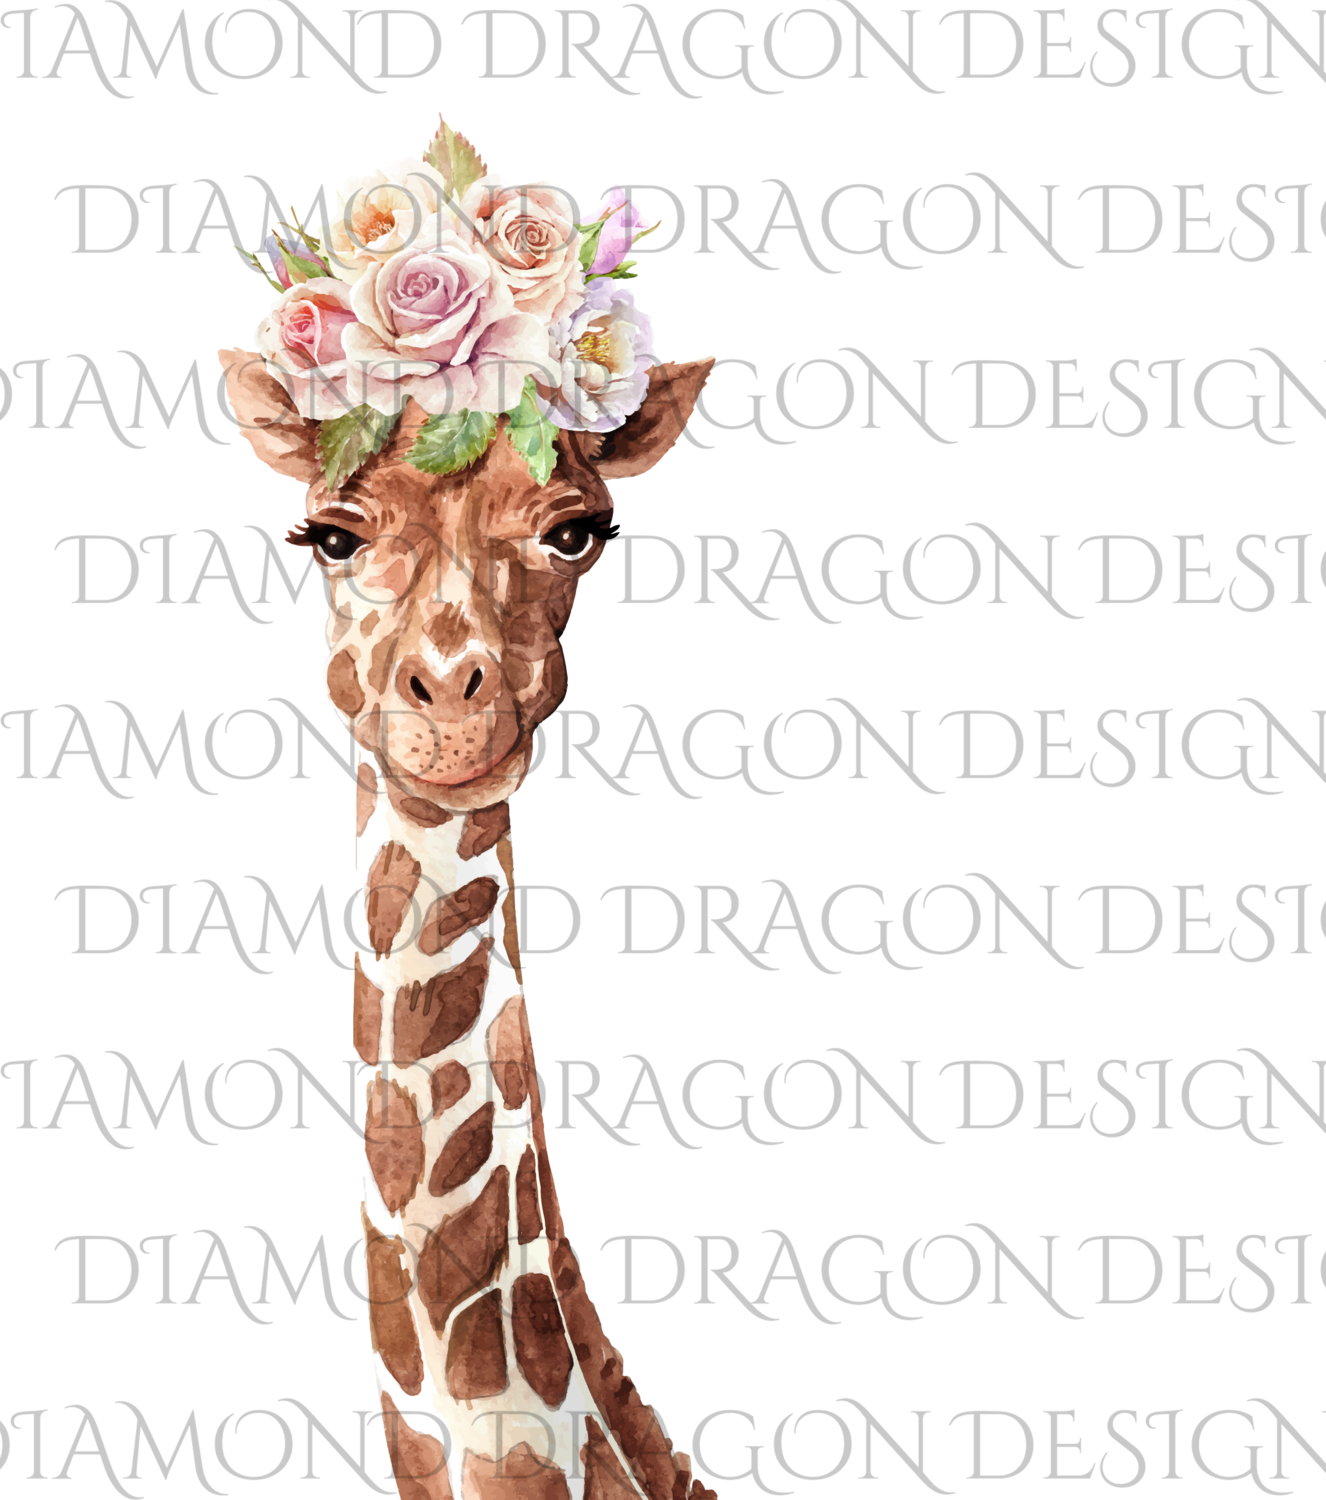 Giraffe - Floral Crown Giraffe